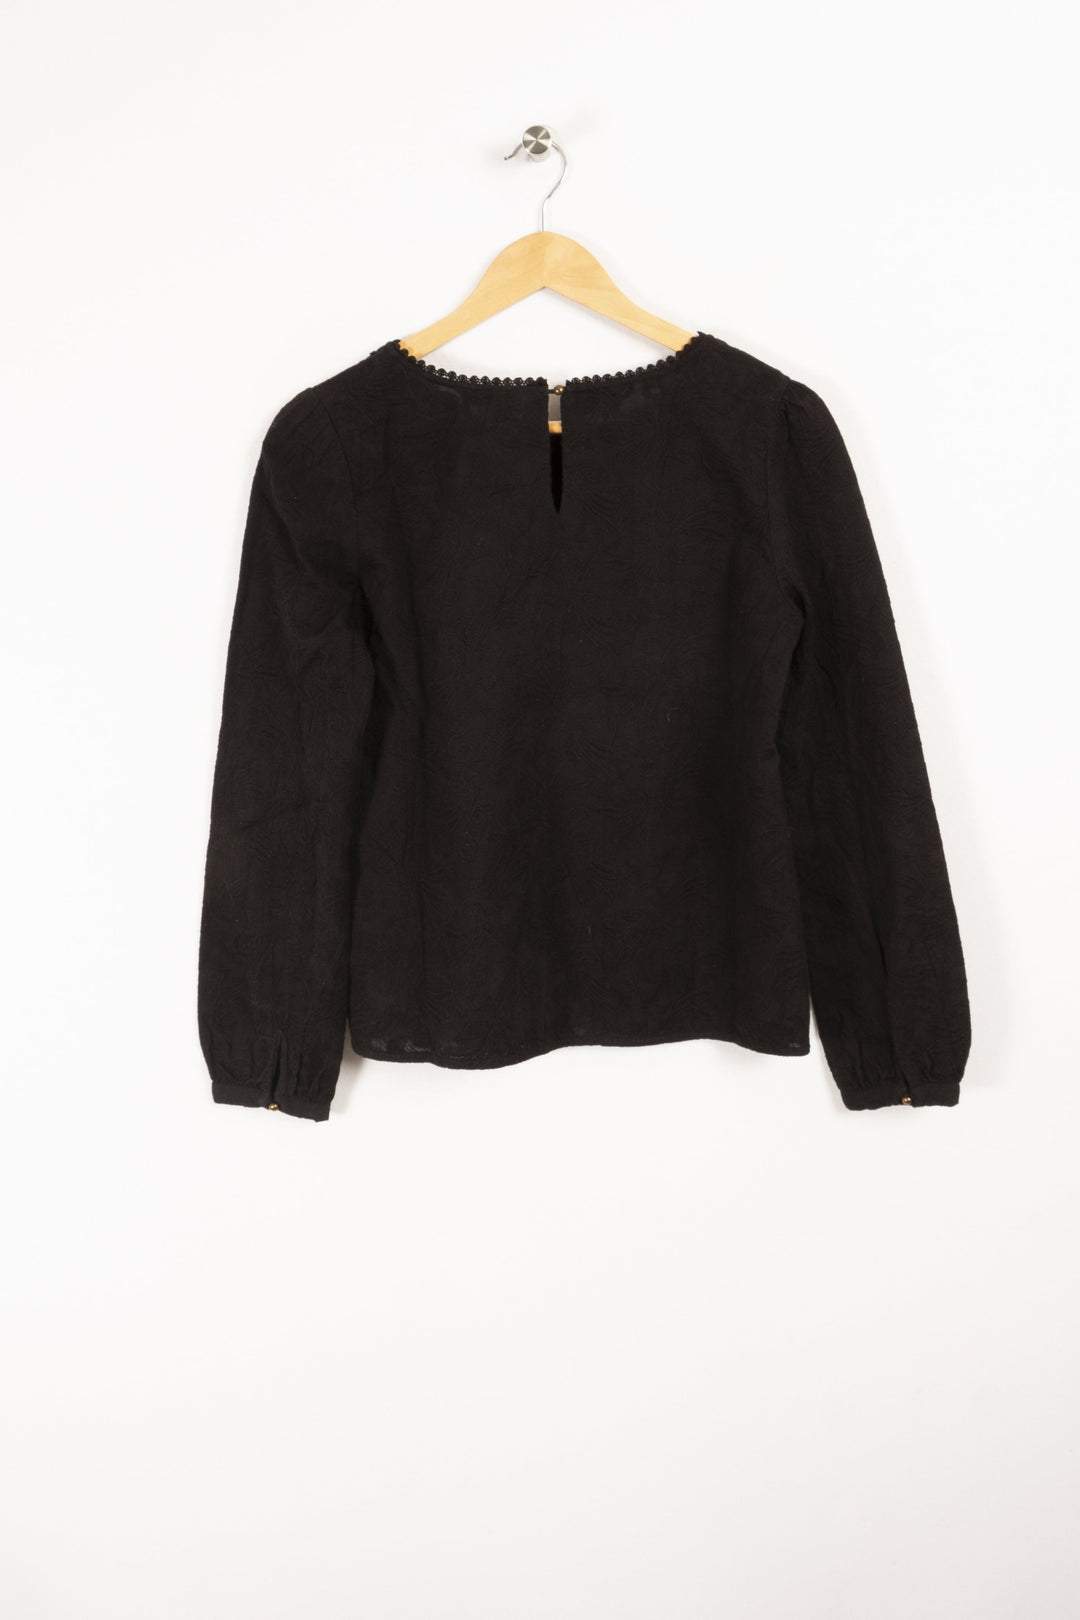 Black winter blouse - M / 38